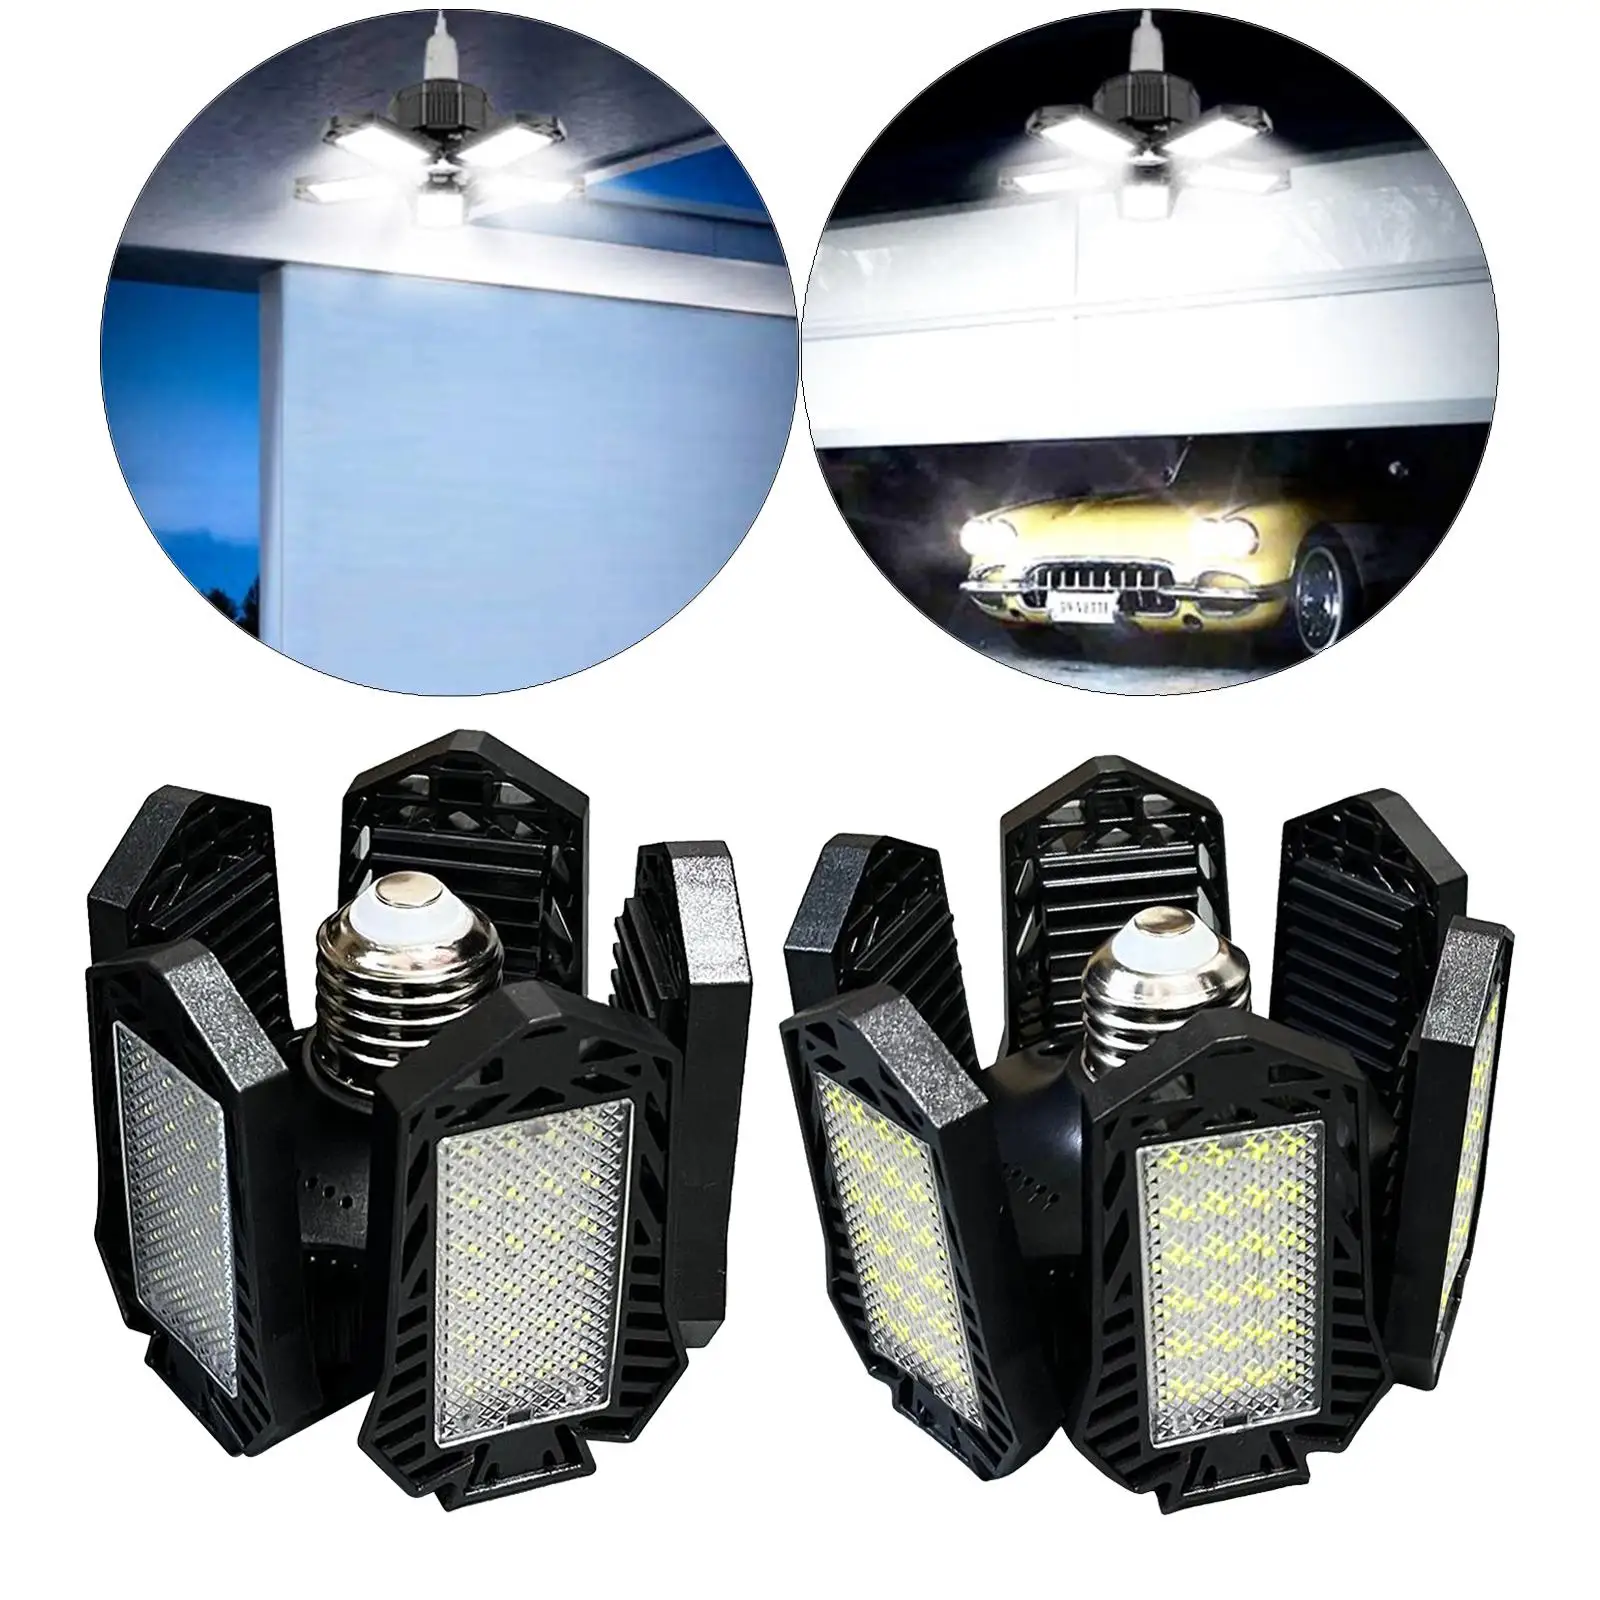 LED Garage Light Multi-Position Panel Workshop Bulb Bay Lamp Adjustable Angle E27 90  Folding Ceiling Lighting